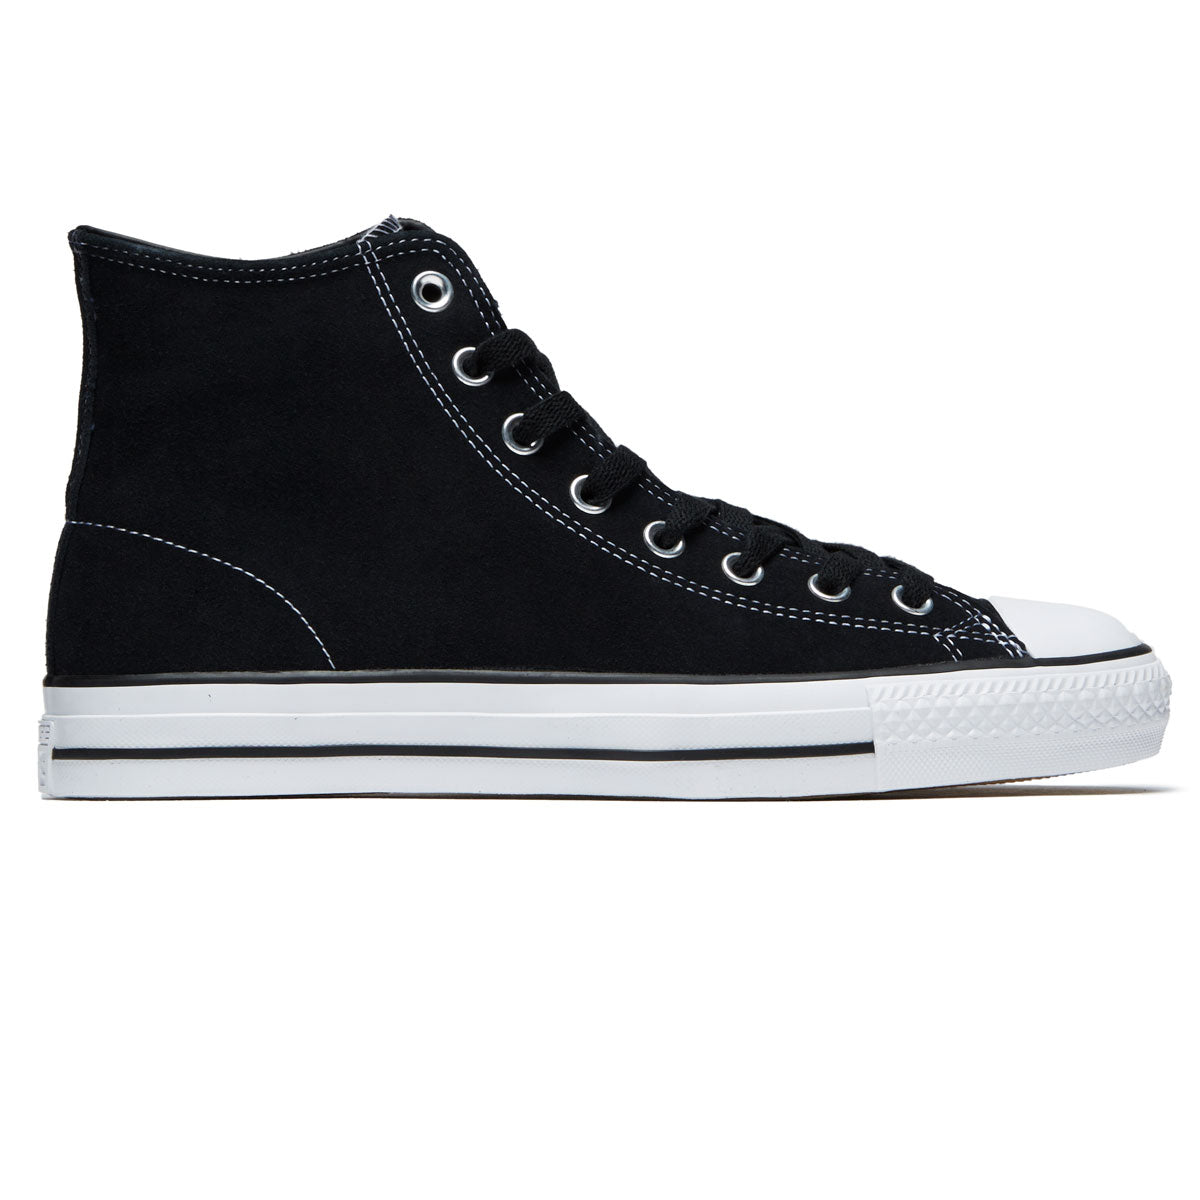 Converse Chuck Taylor All Star Pro Suede Hi Shoes - Black/Black/White – CCS